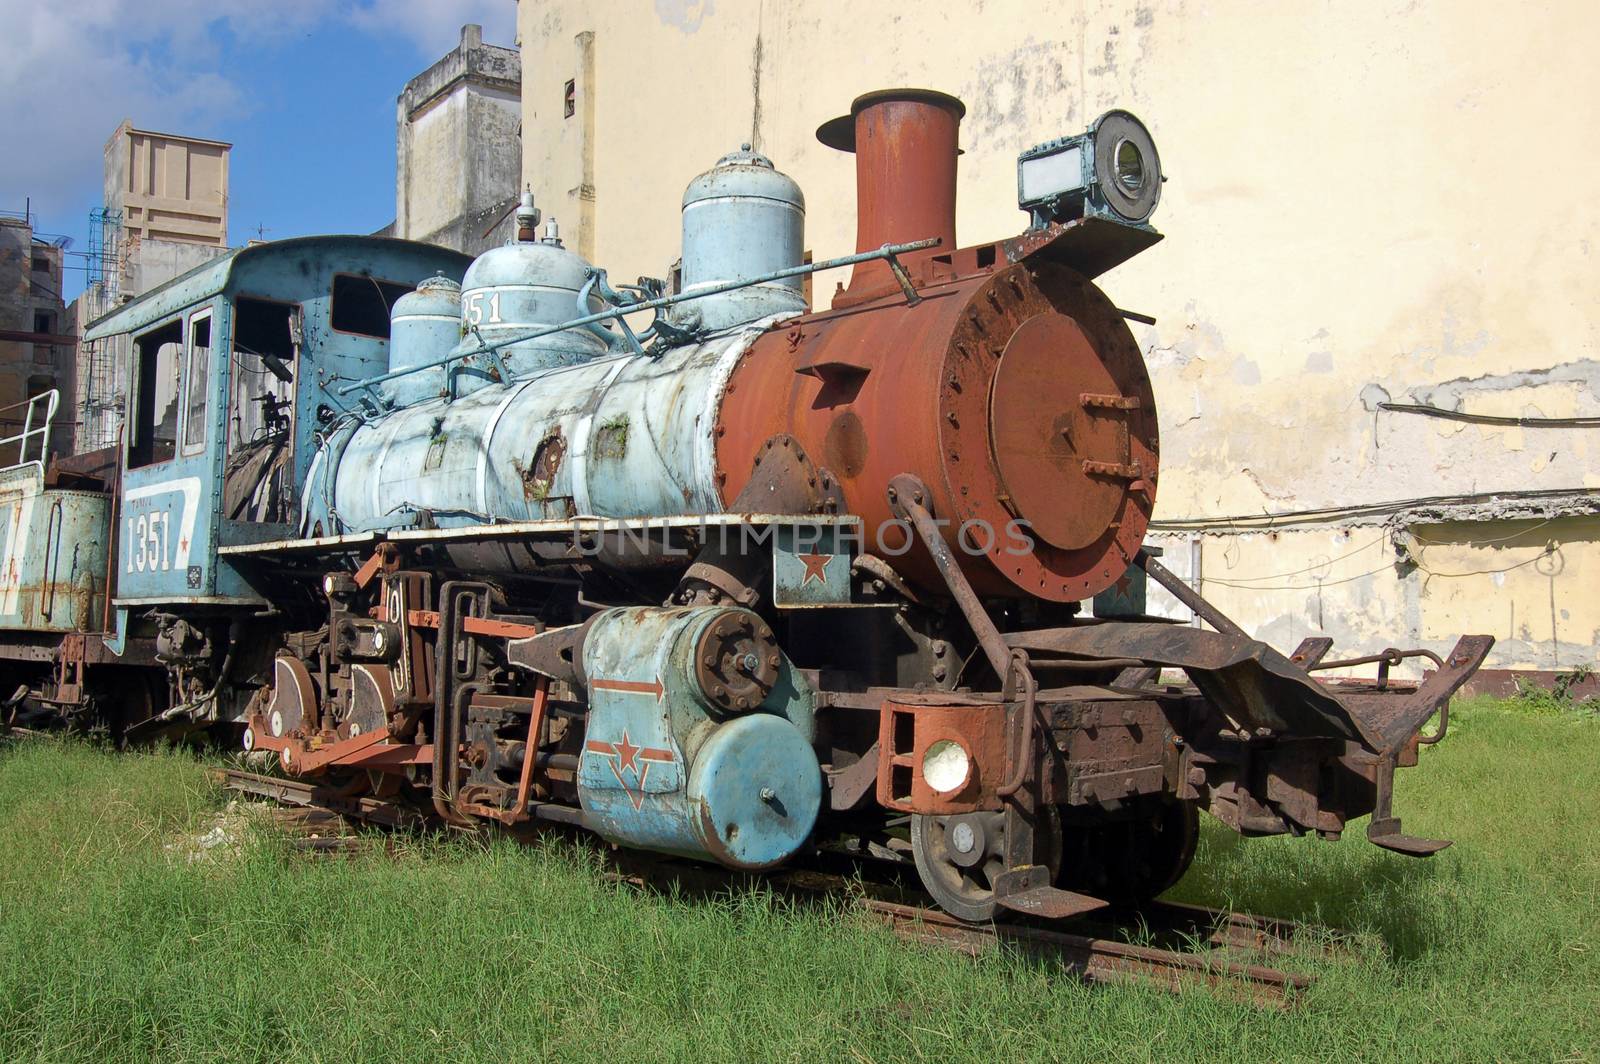 A rusting steam train engine in Central Havana, Cuba.